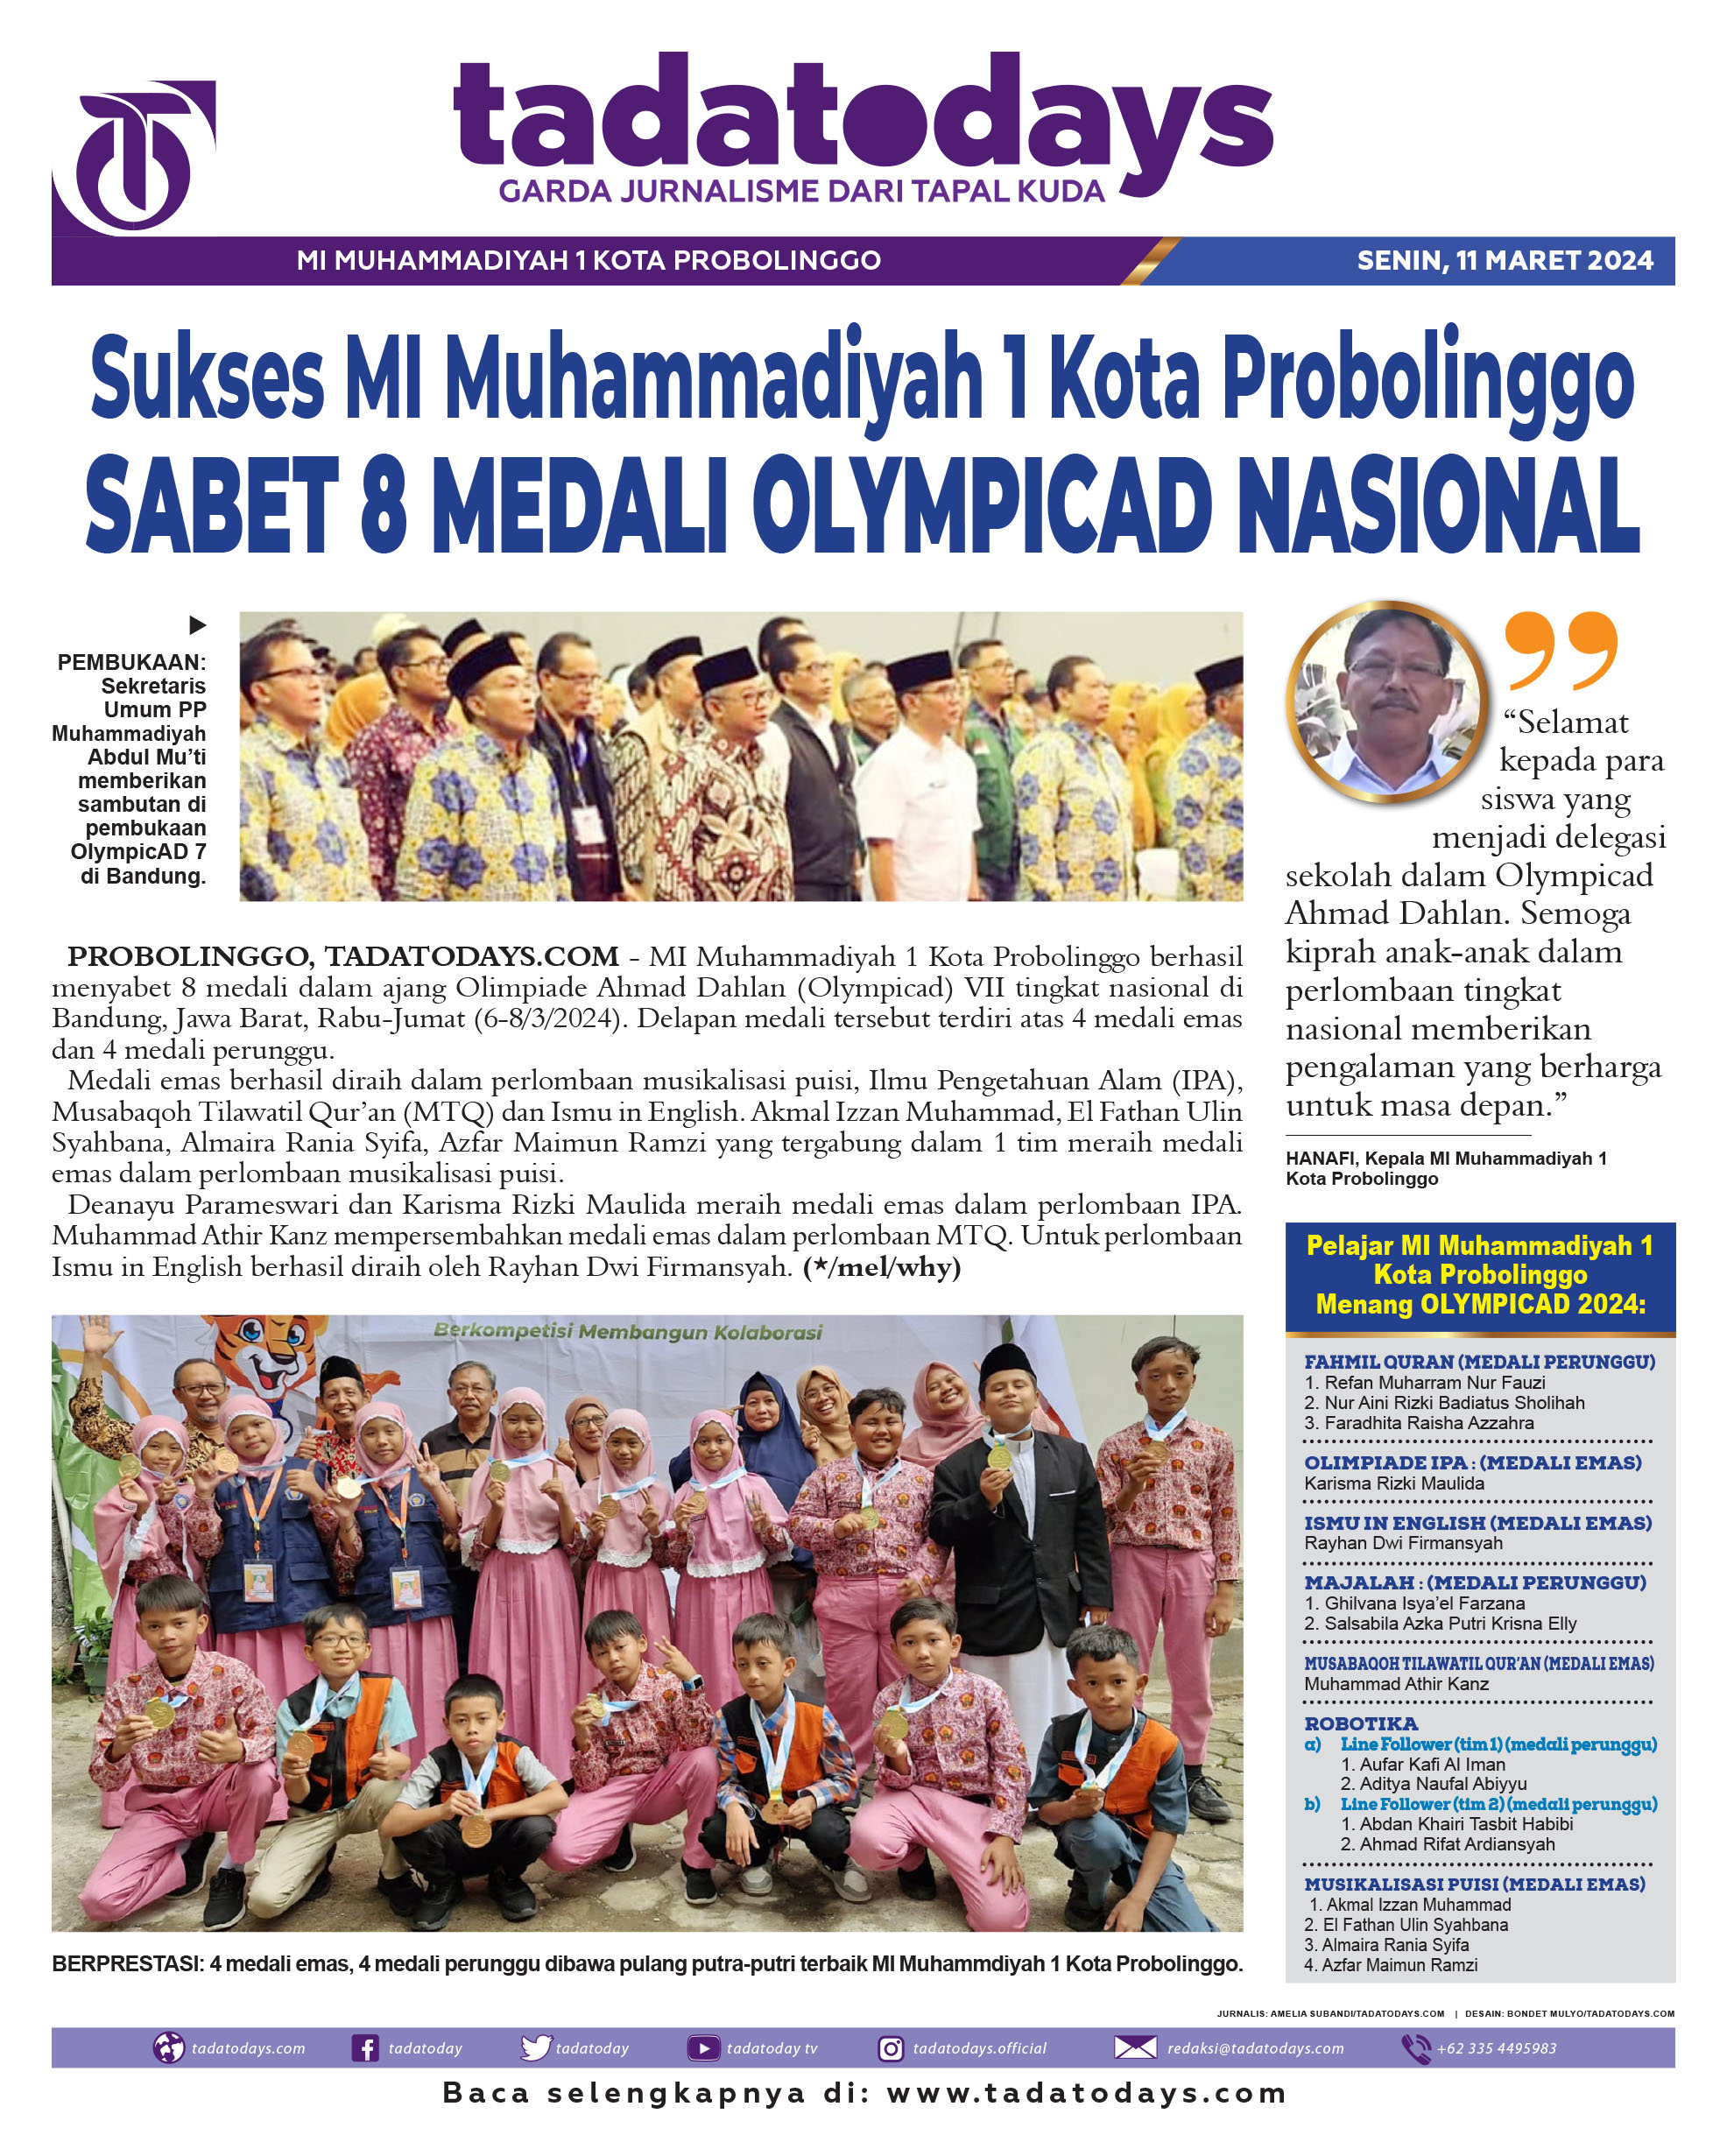 Sukses MI Muhammadiyah 1 Kota Probolinggo Menyabet 8 Medali Olympicad Nasional